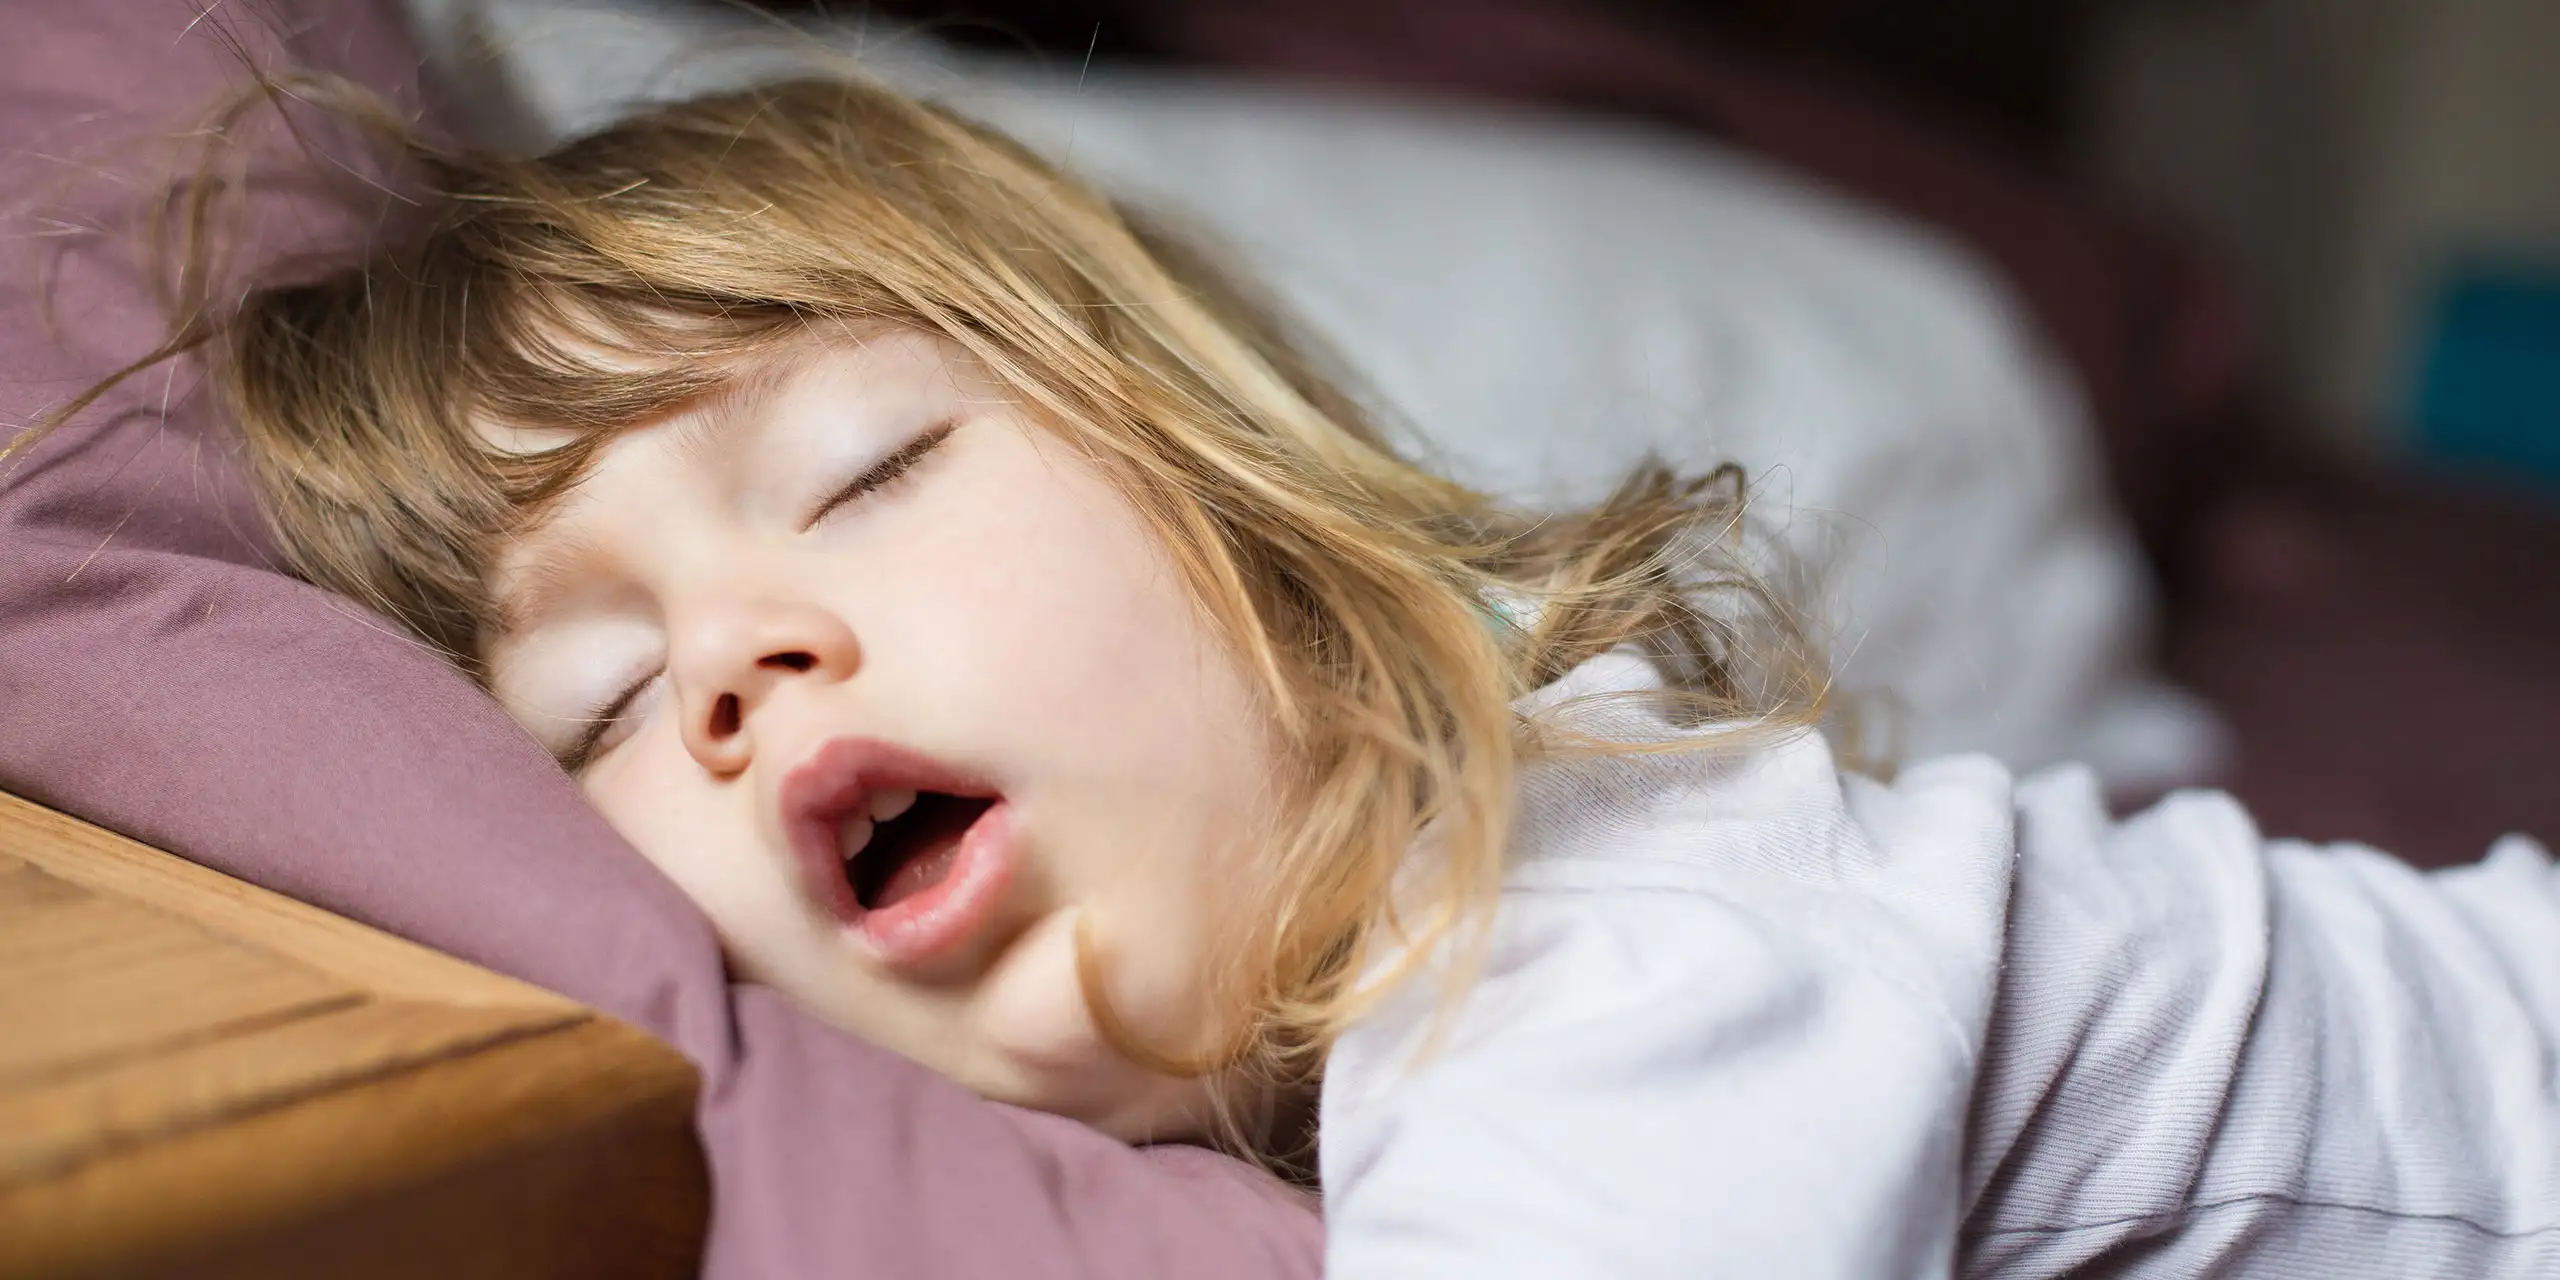 Sleeping Girl; Courtesy of Quintanilla/Shutterstock.com